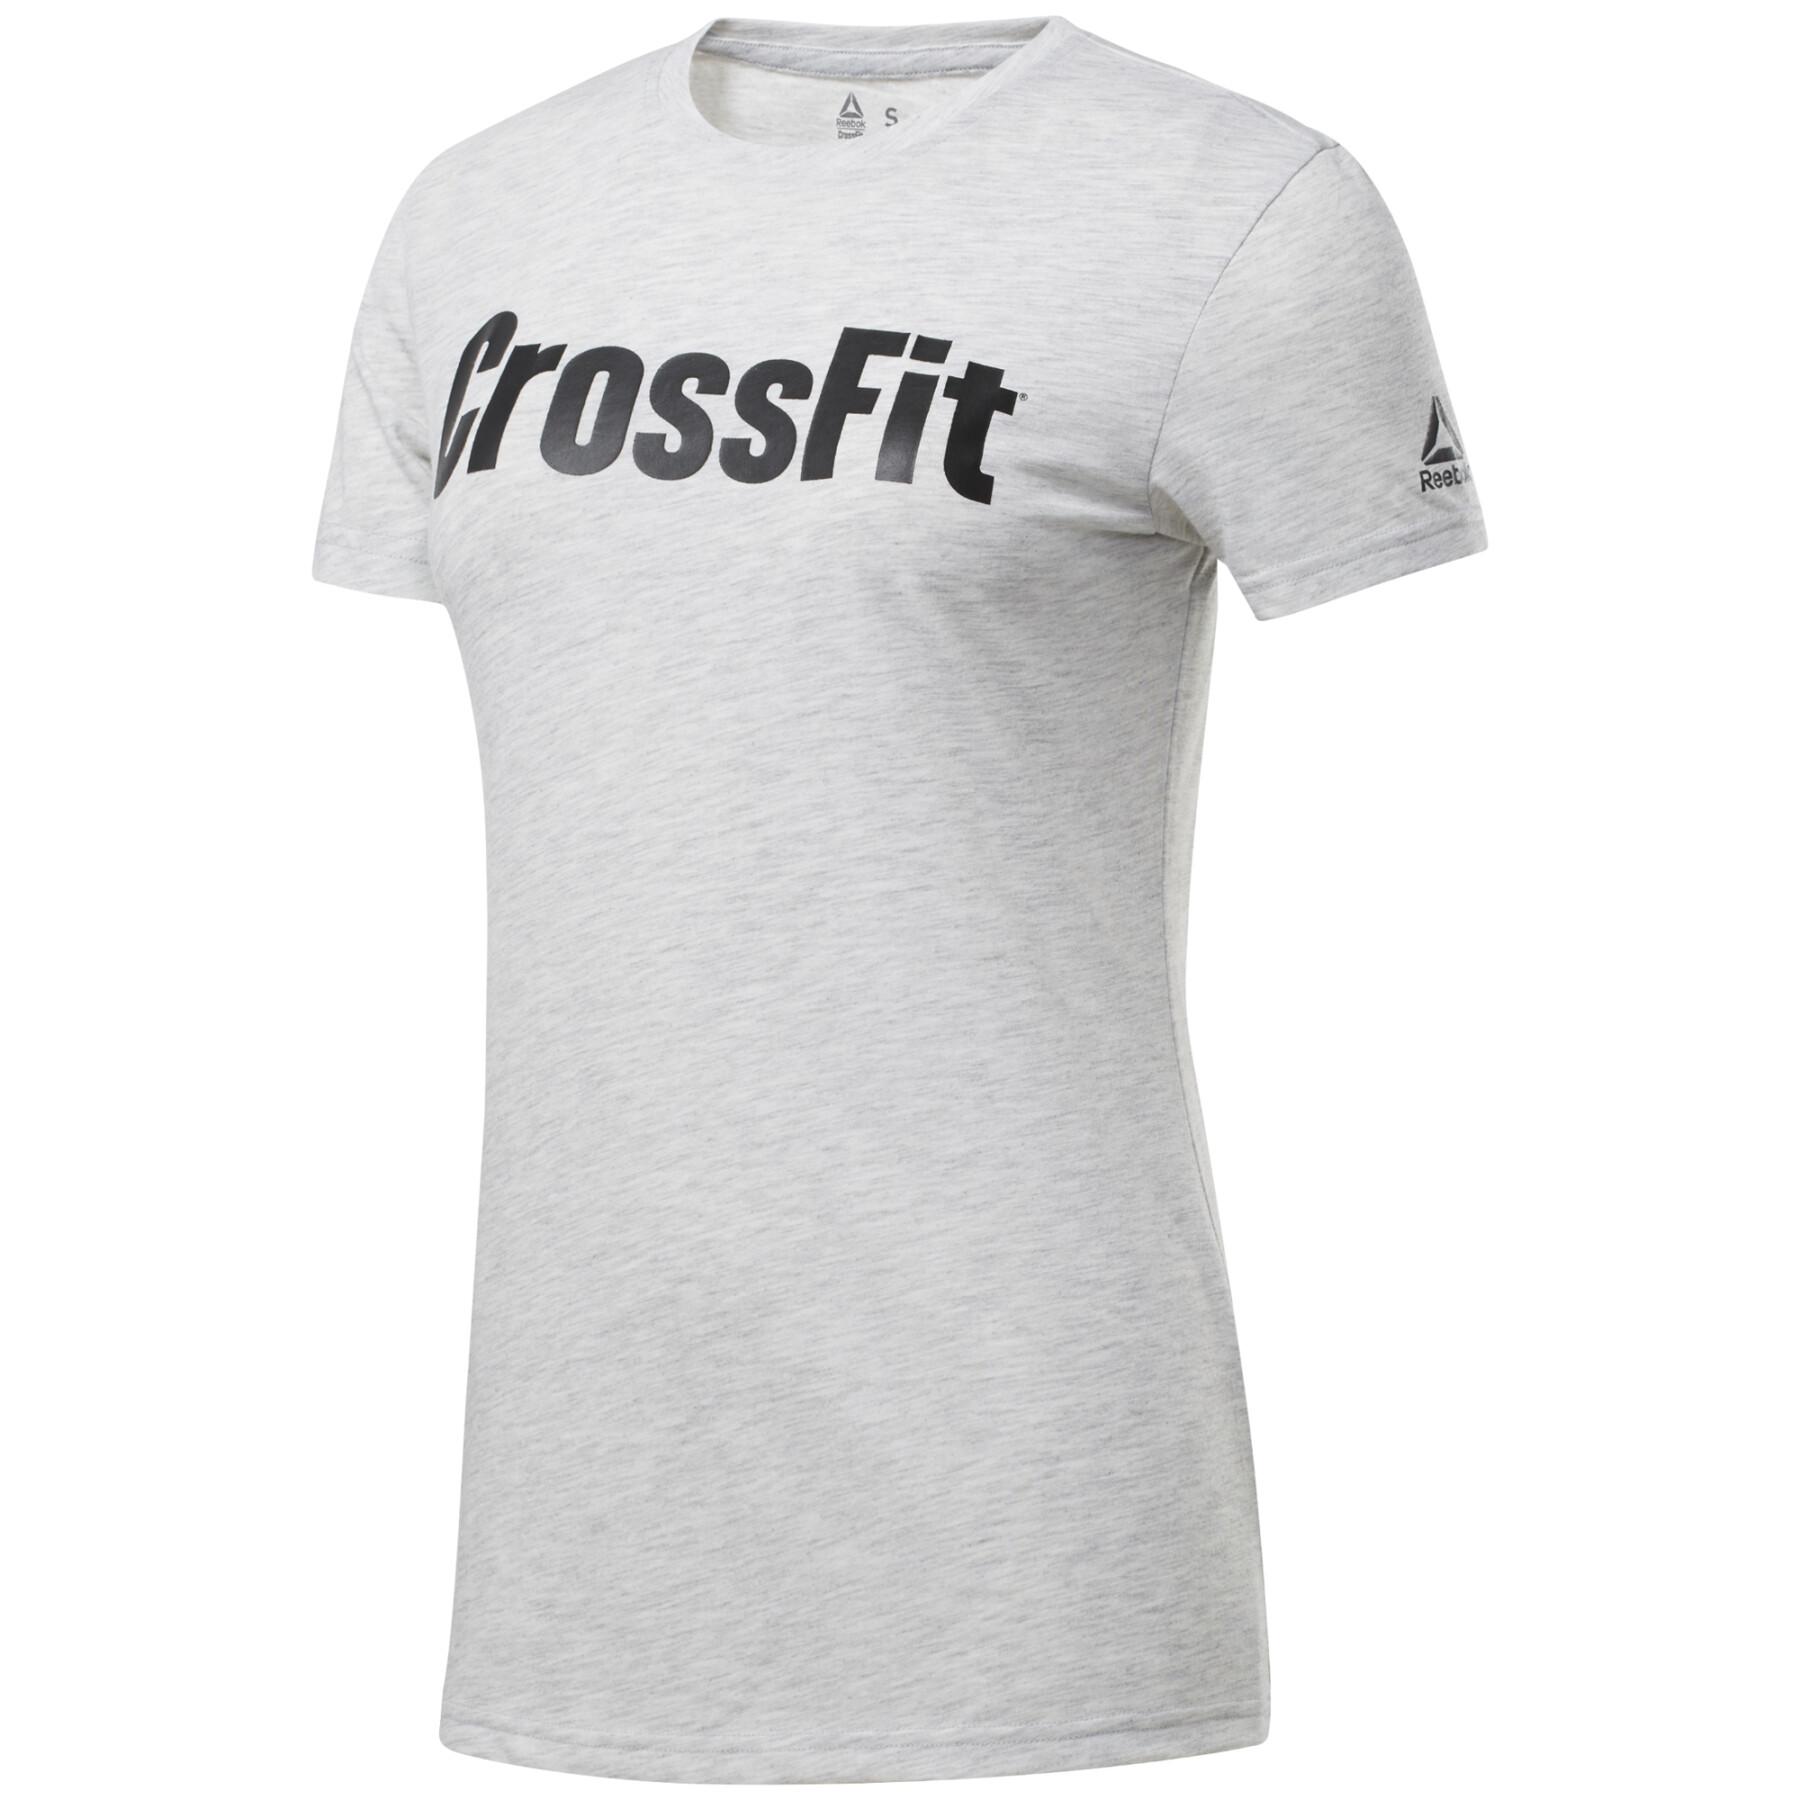 T-shirt donna Reebok CrossFit®